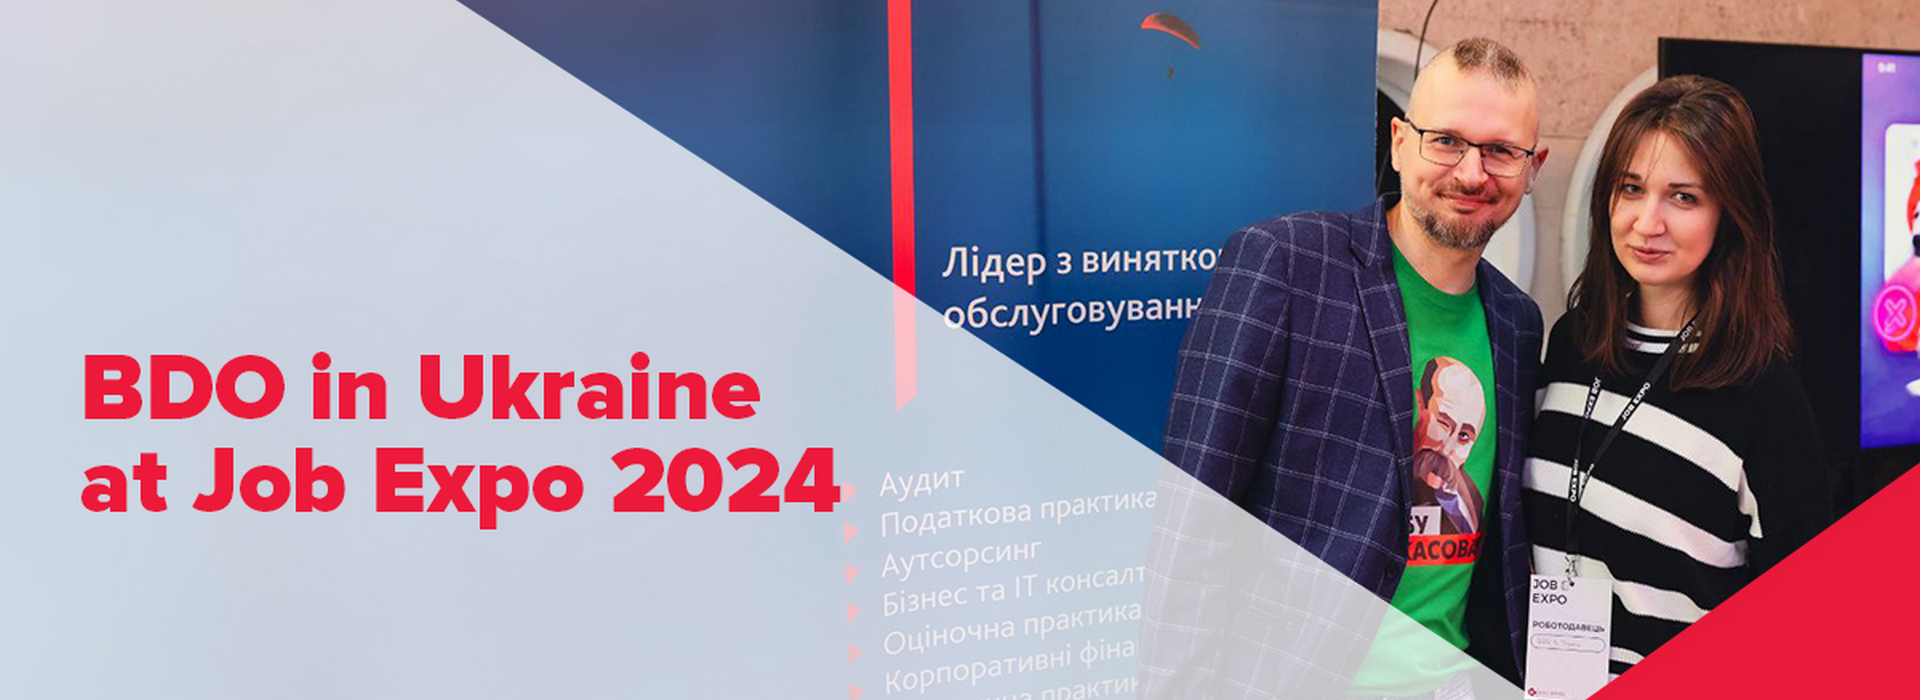 BDO in Ukraine at Job Expo 2024